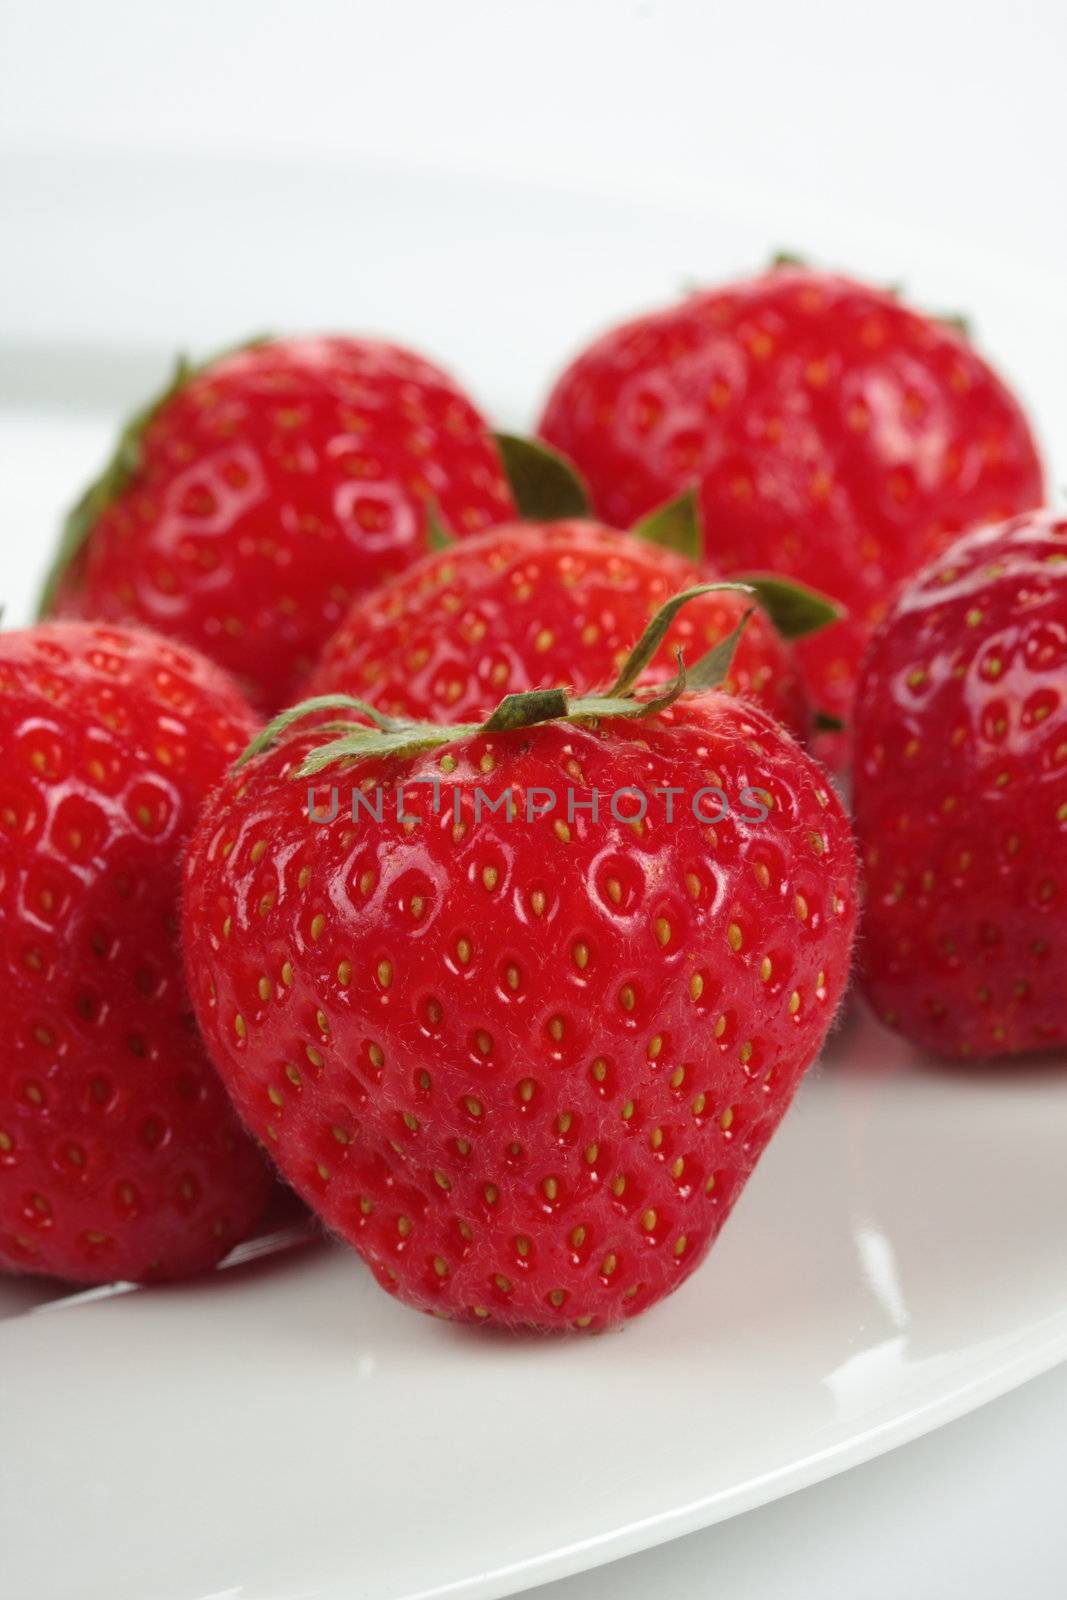 Strawberries by bernjuer